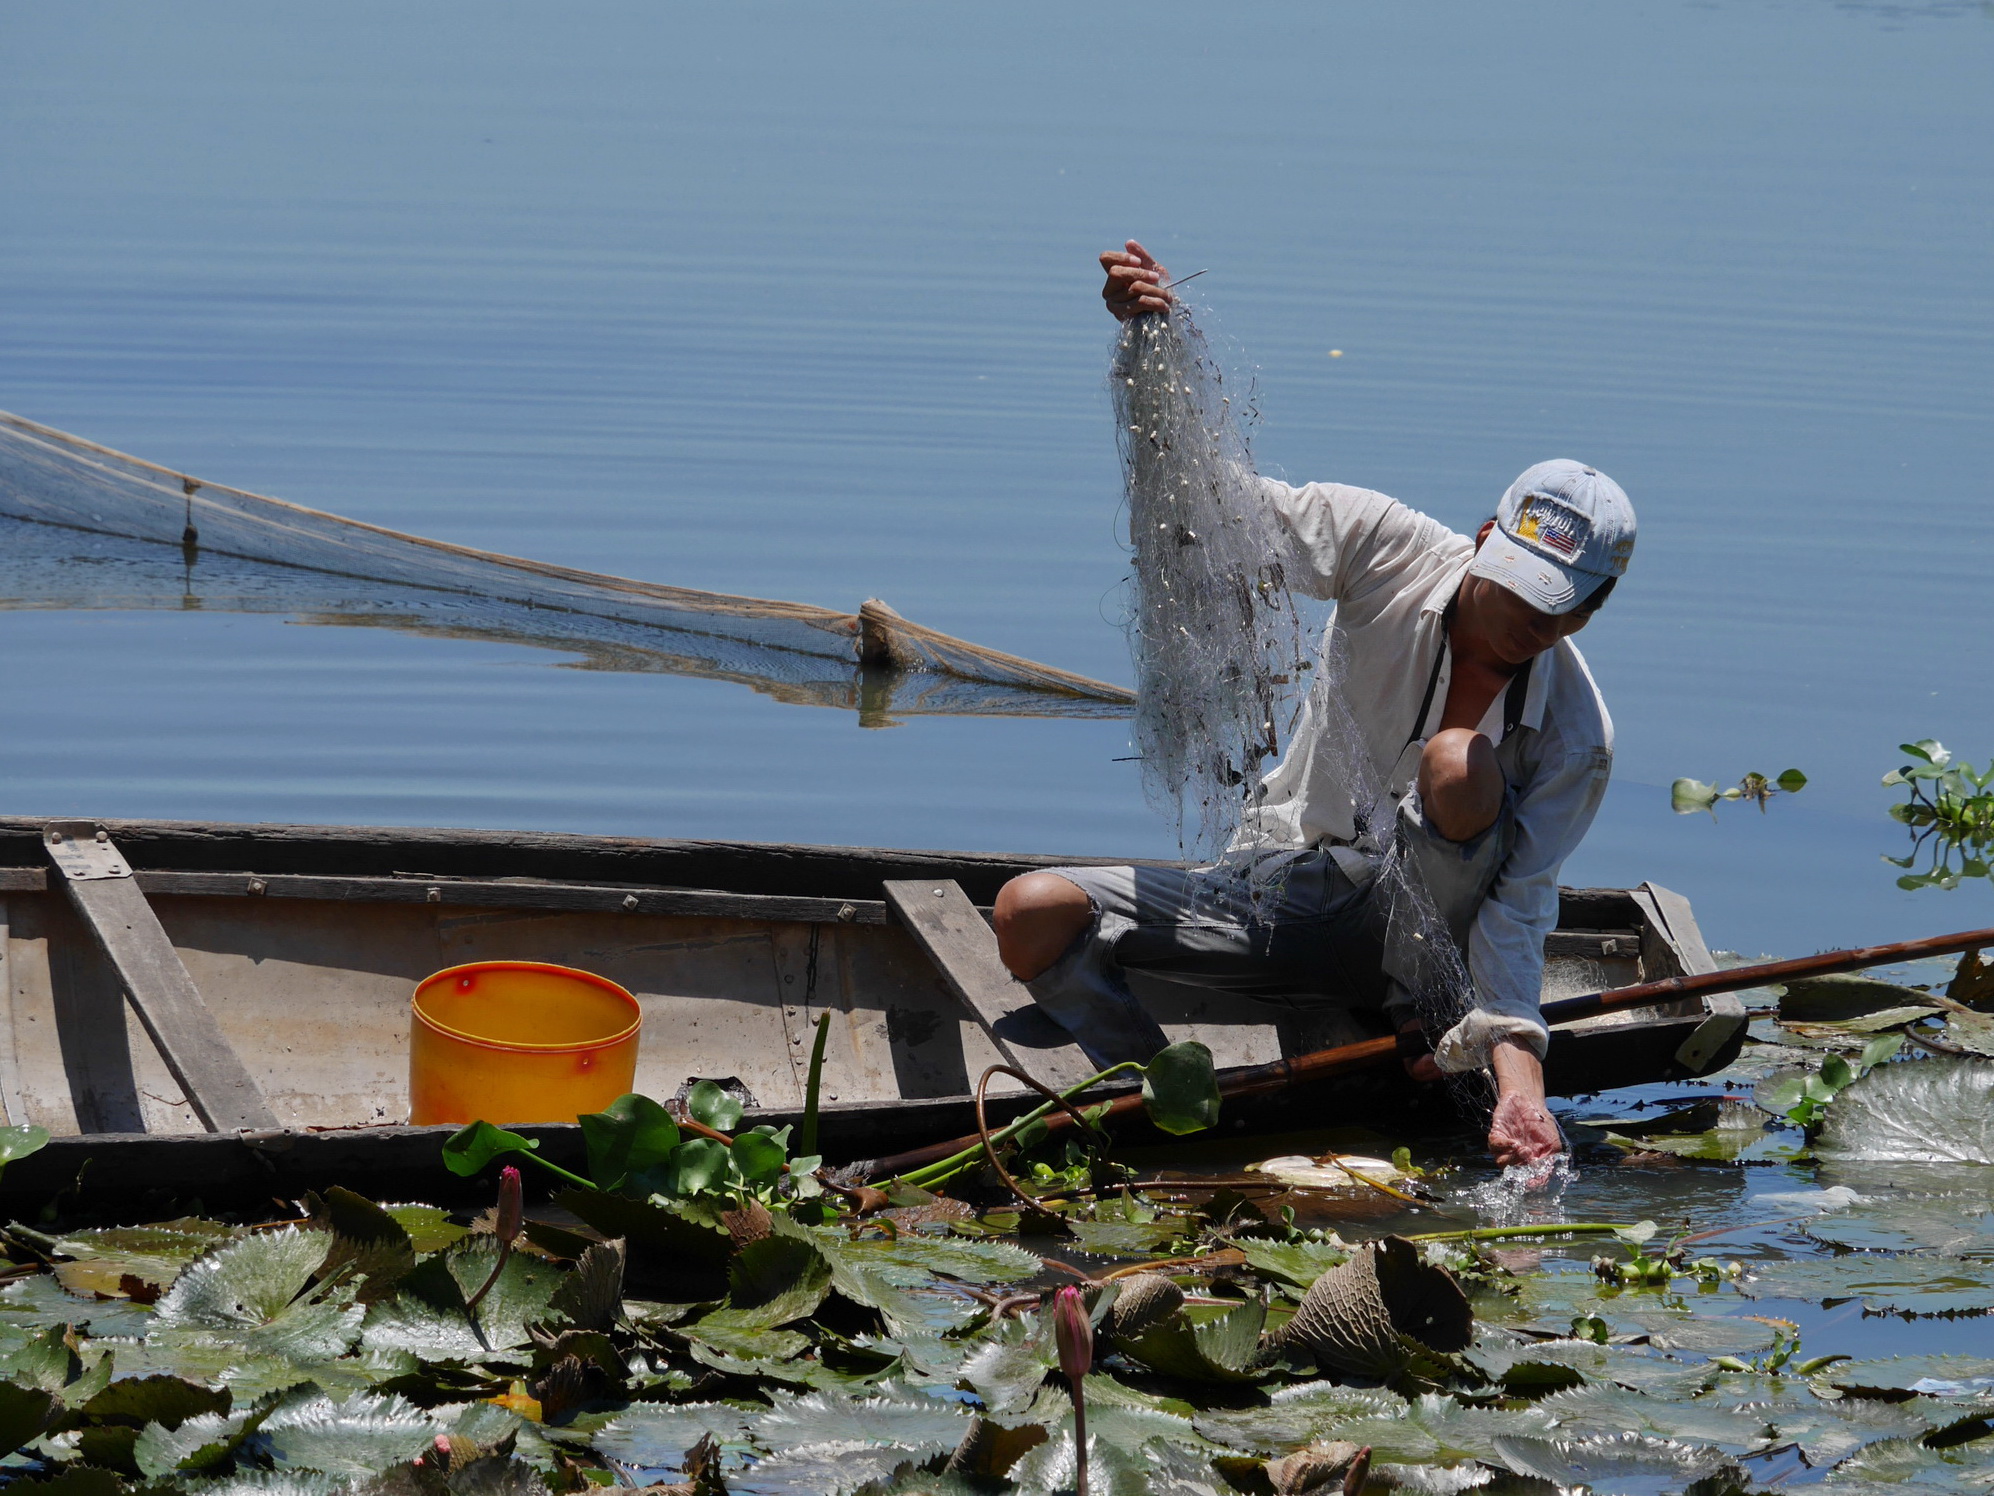 Vietnam Fishing